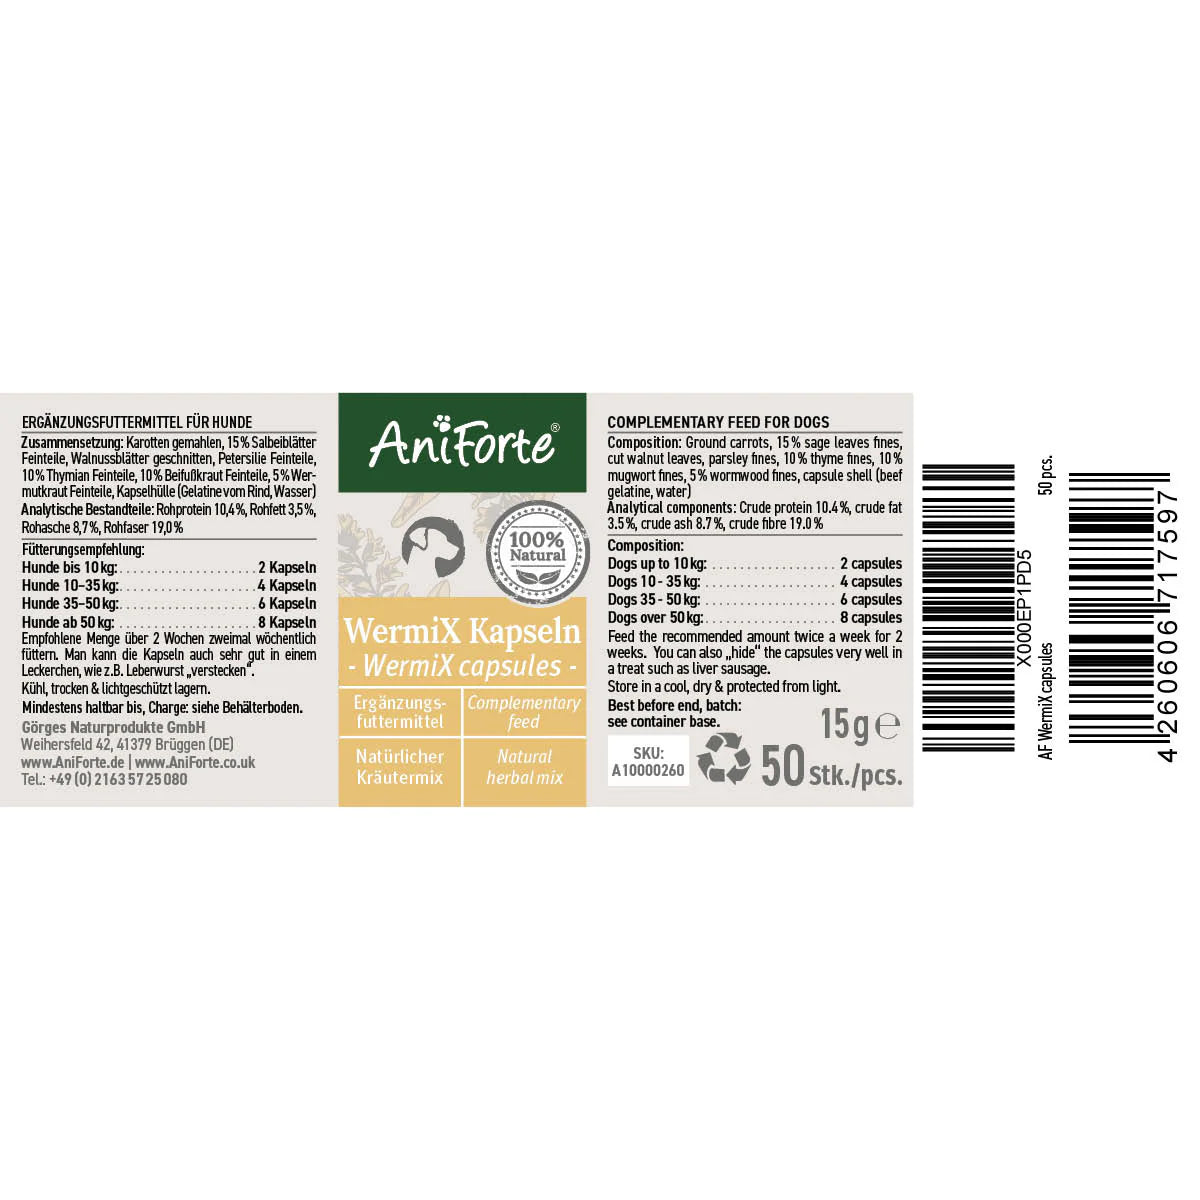 Aniforte-Wermix-Kapseln-Hunde-Etikett